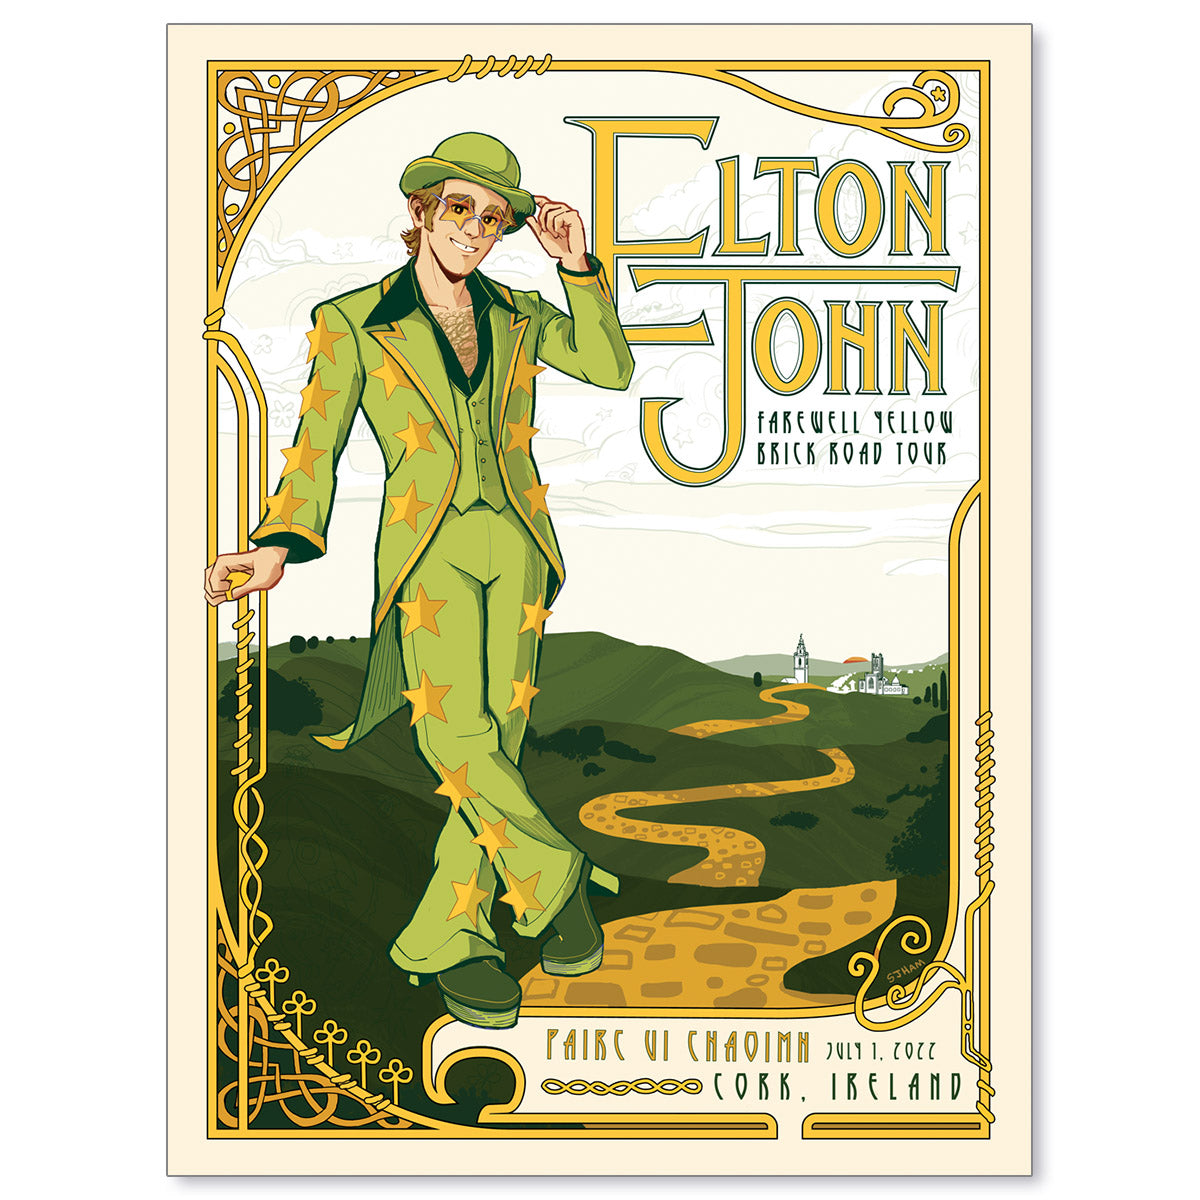 Elton John Cork July 1, 2022 Farewell Yellow Brick Road Tour